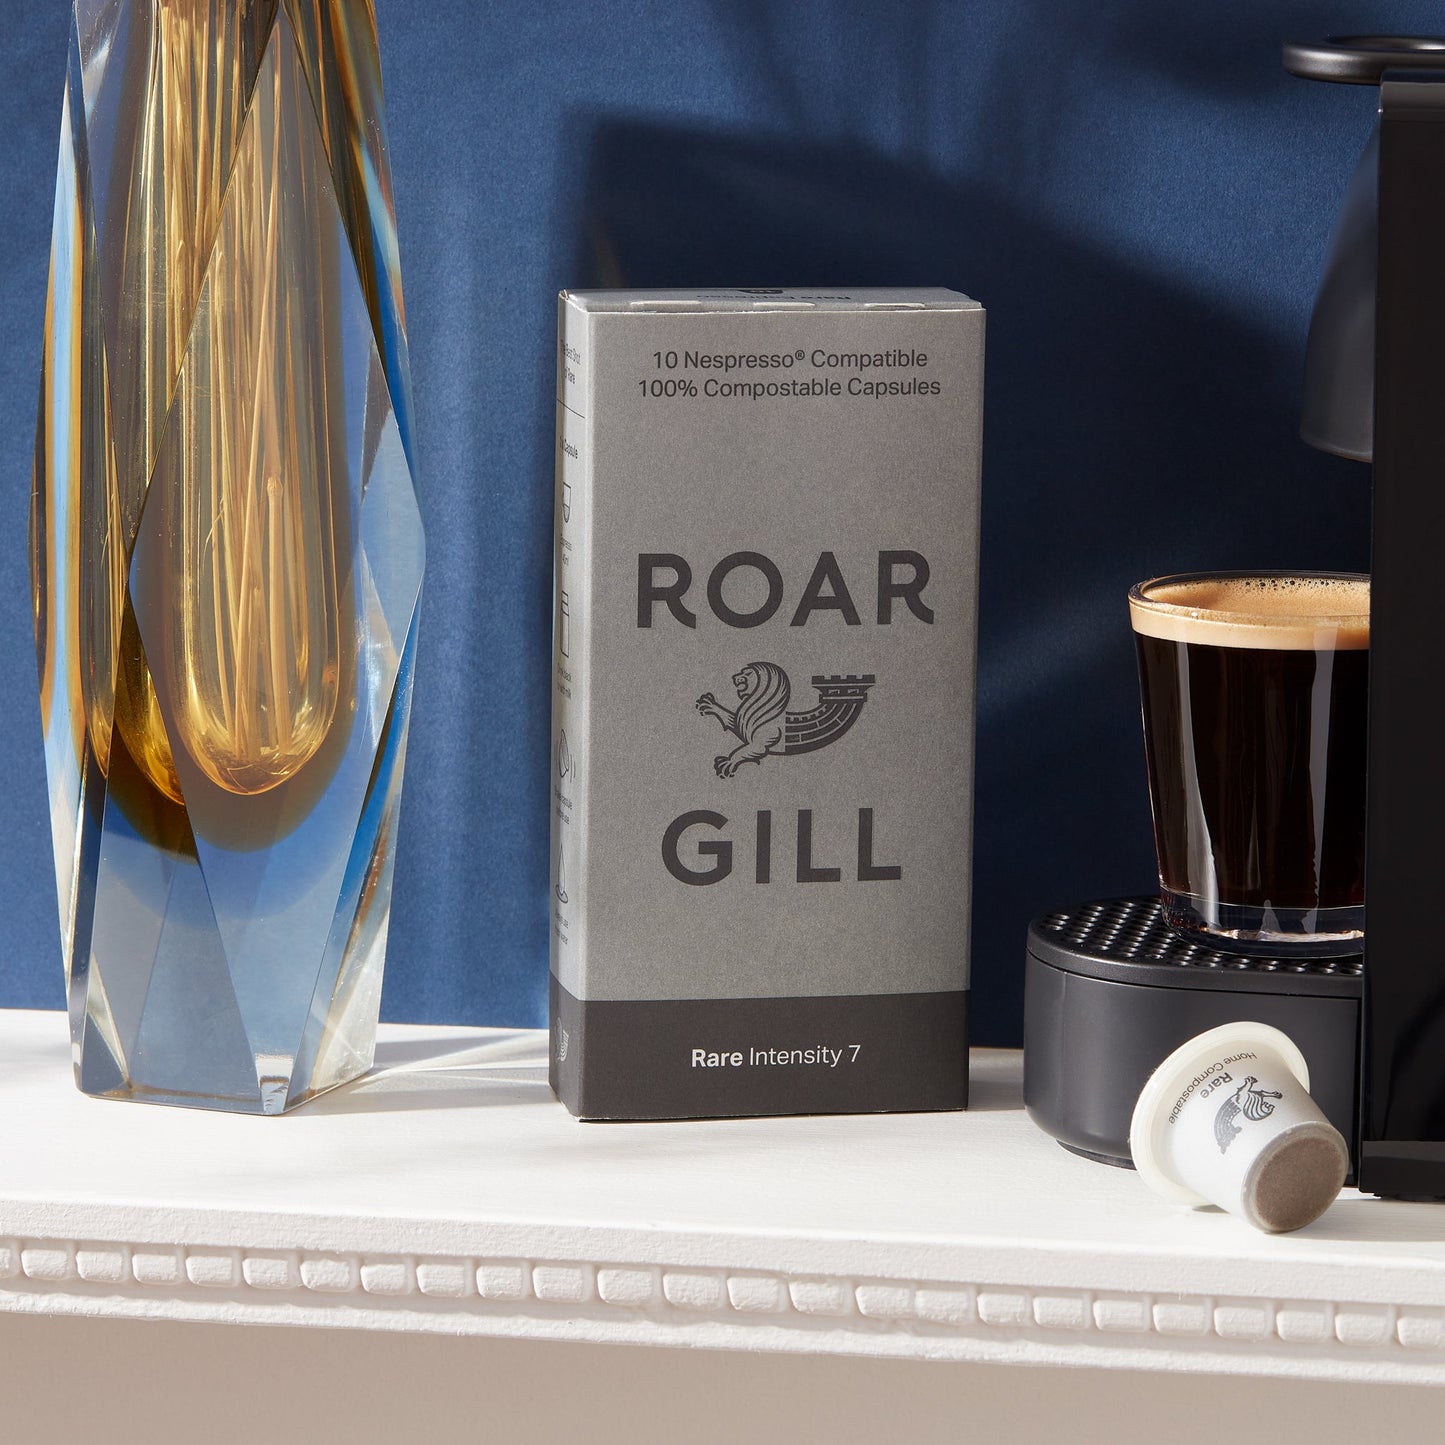 Roar Gill Rare Box Standing Next to Krups Coffee Machine.